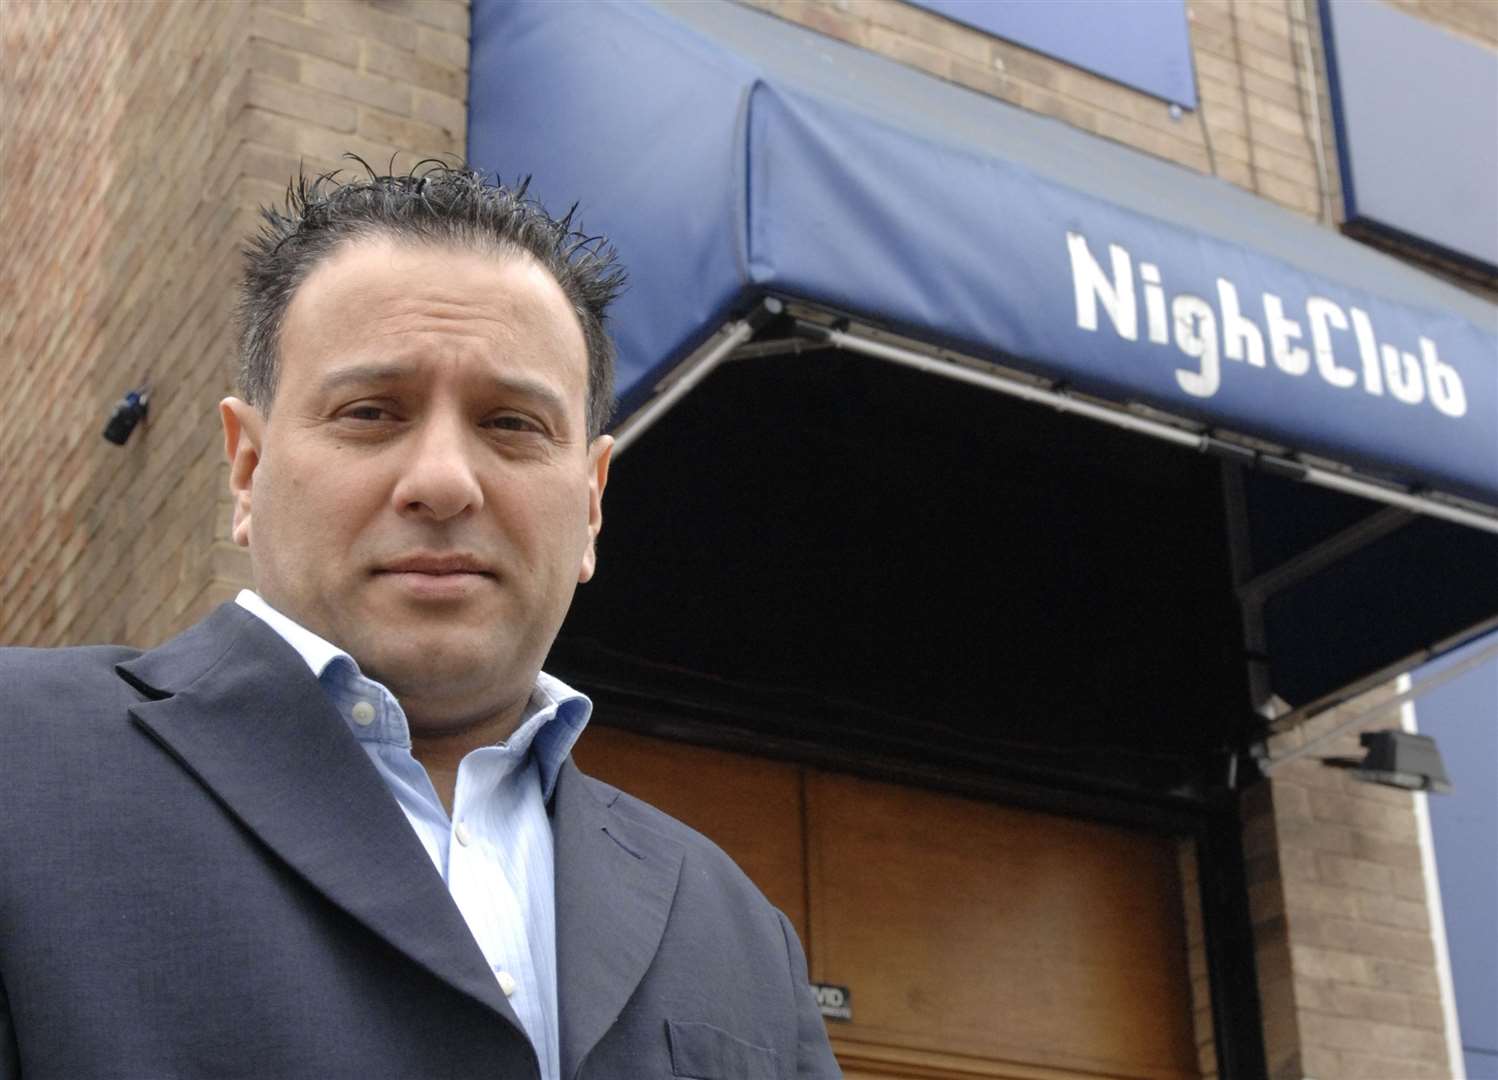 Karl Ahmad, owner of the Vivid in Herne Bay, was knifed outside his nightclub